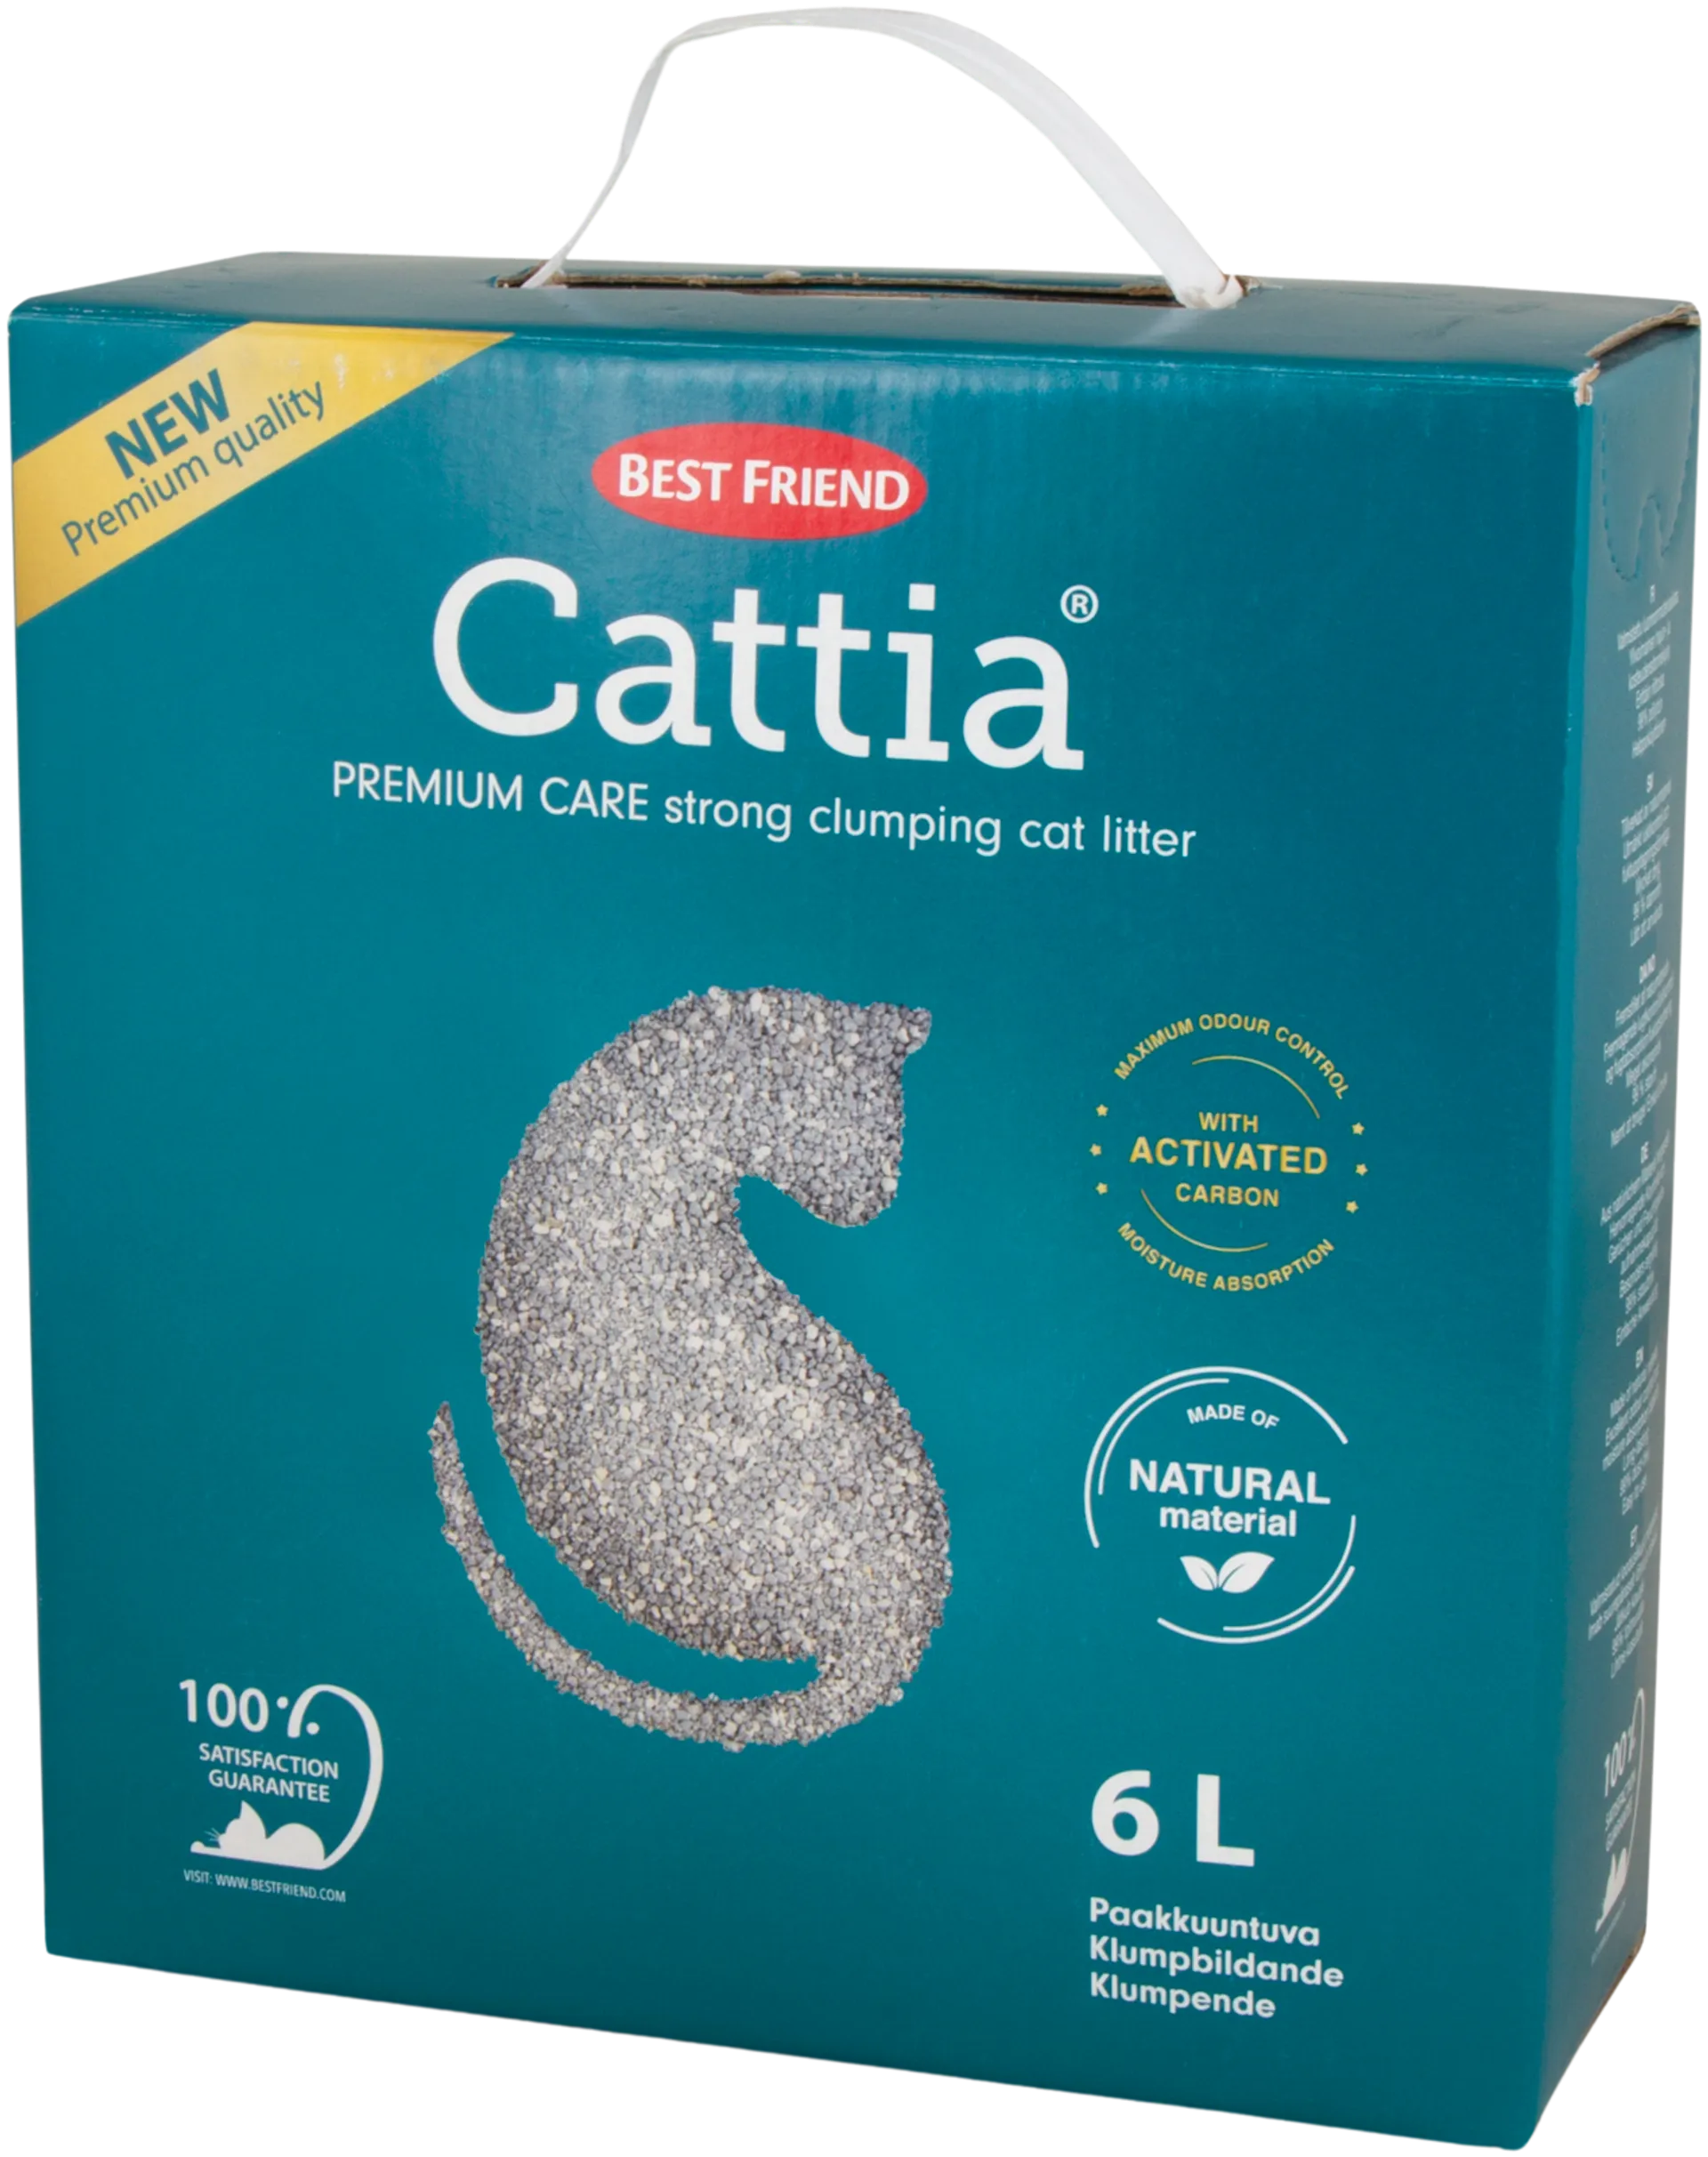 Best Friend Cattia Premium Care paakkuuntuva kissanhiekka 6 l